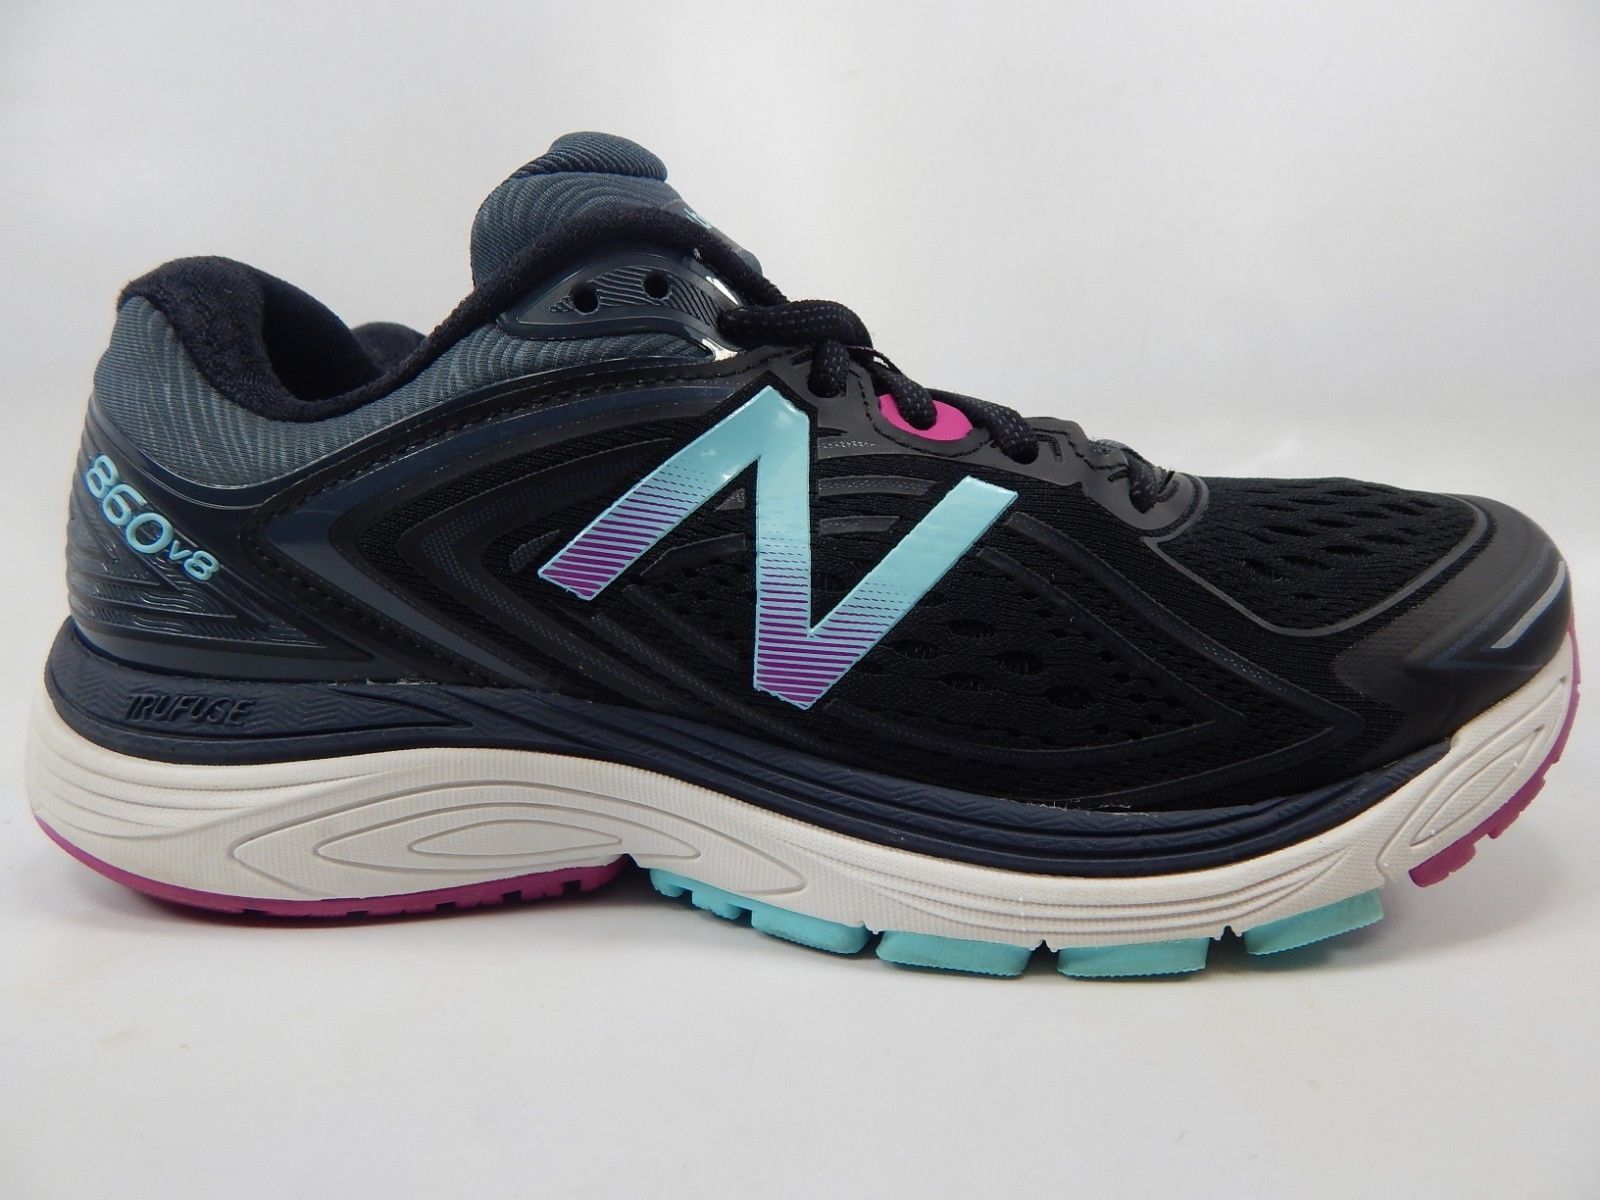 New Balance 860 v8 Size US 9 M (B) EU 40.5 Women's Running Shoes Black ...